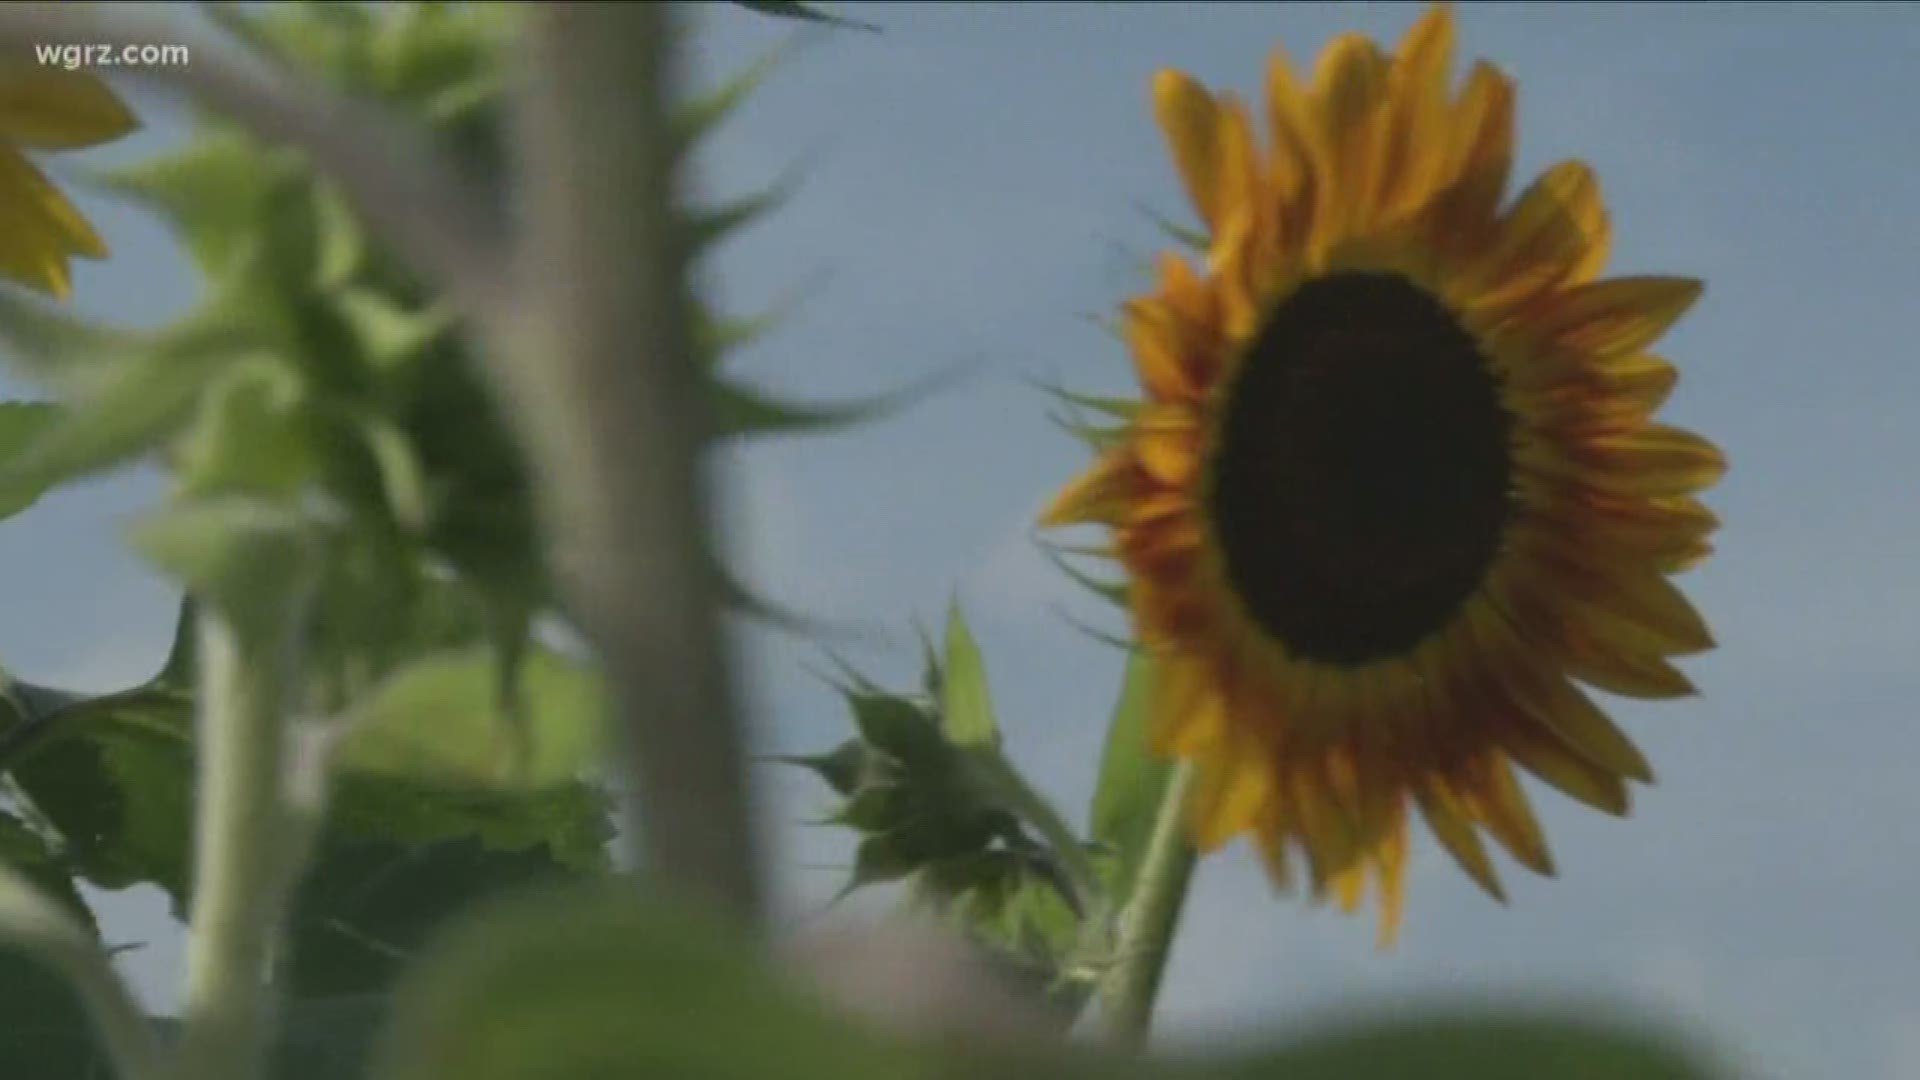 Sanborn Sunflower field was broken into overnight and vandalized.